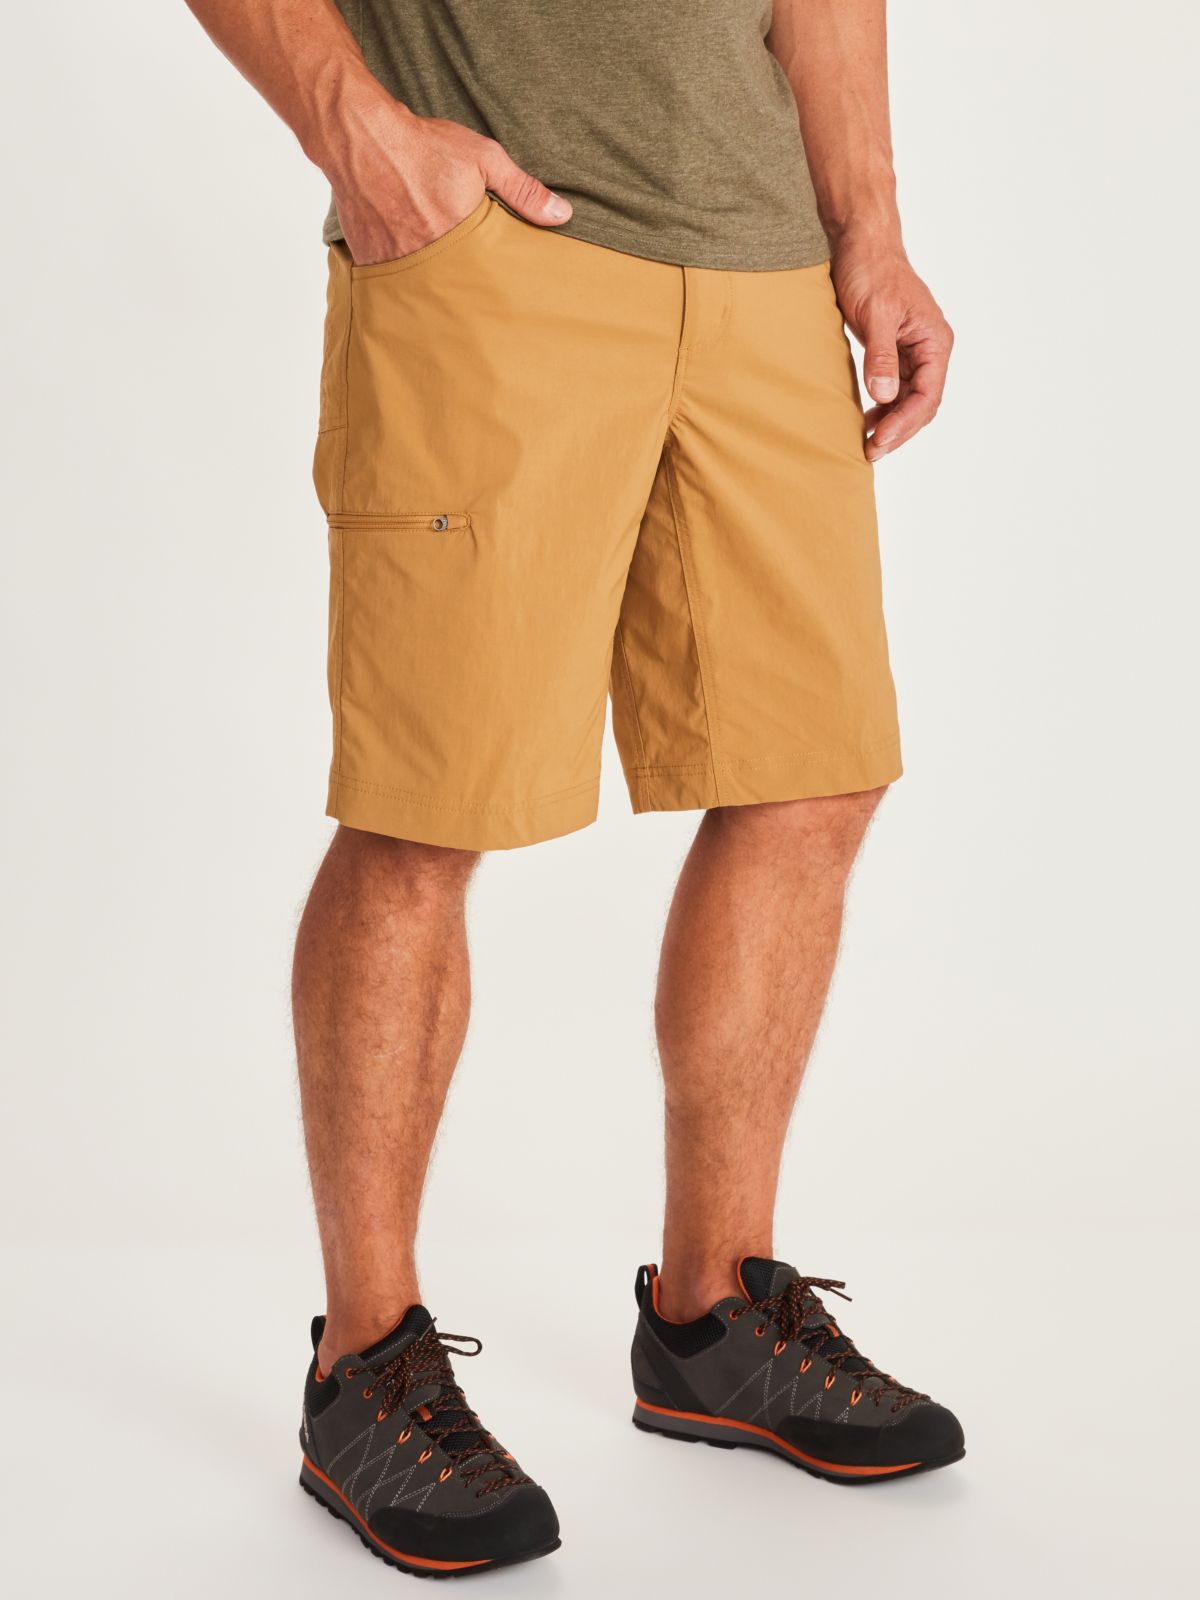 Men's Arch Rock Shorts